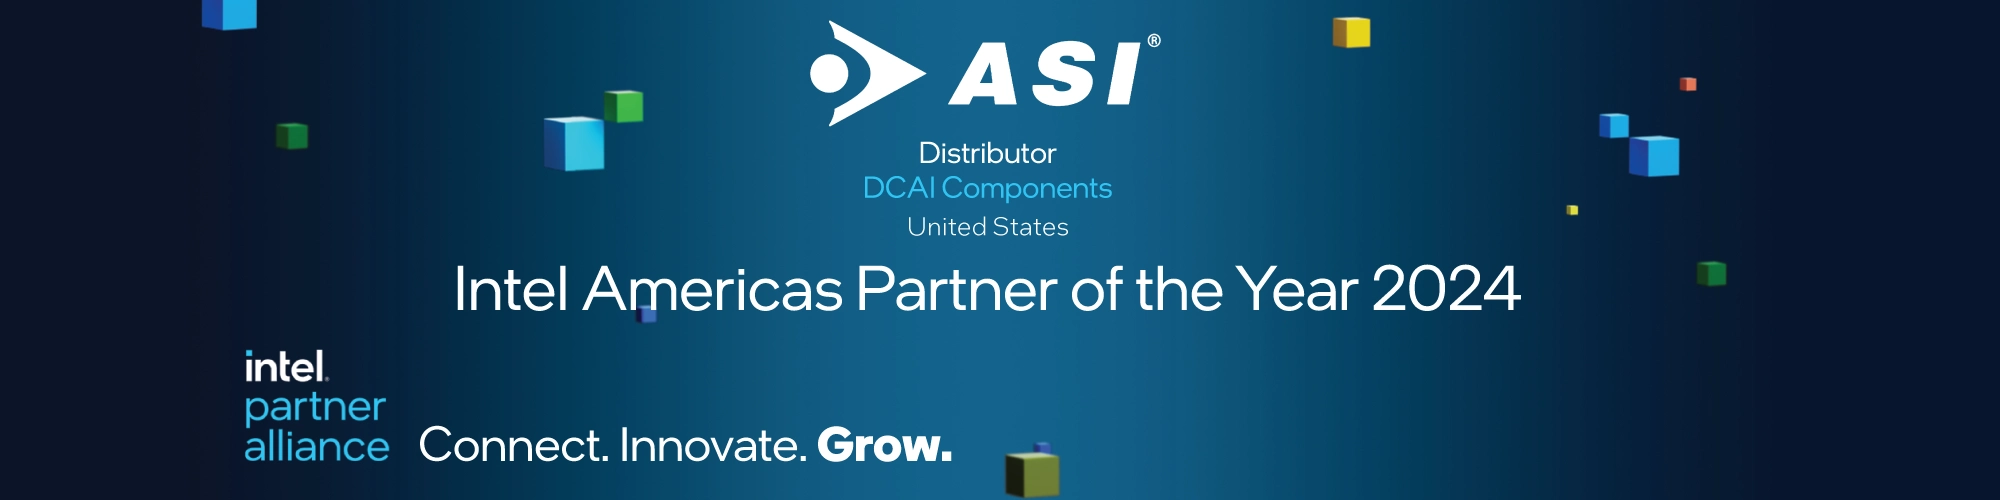 ASI Intel Partner of the Year Award Banner